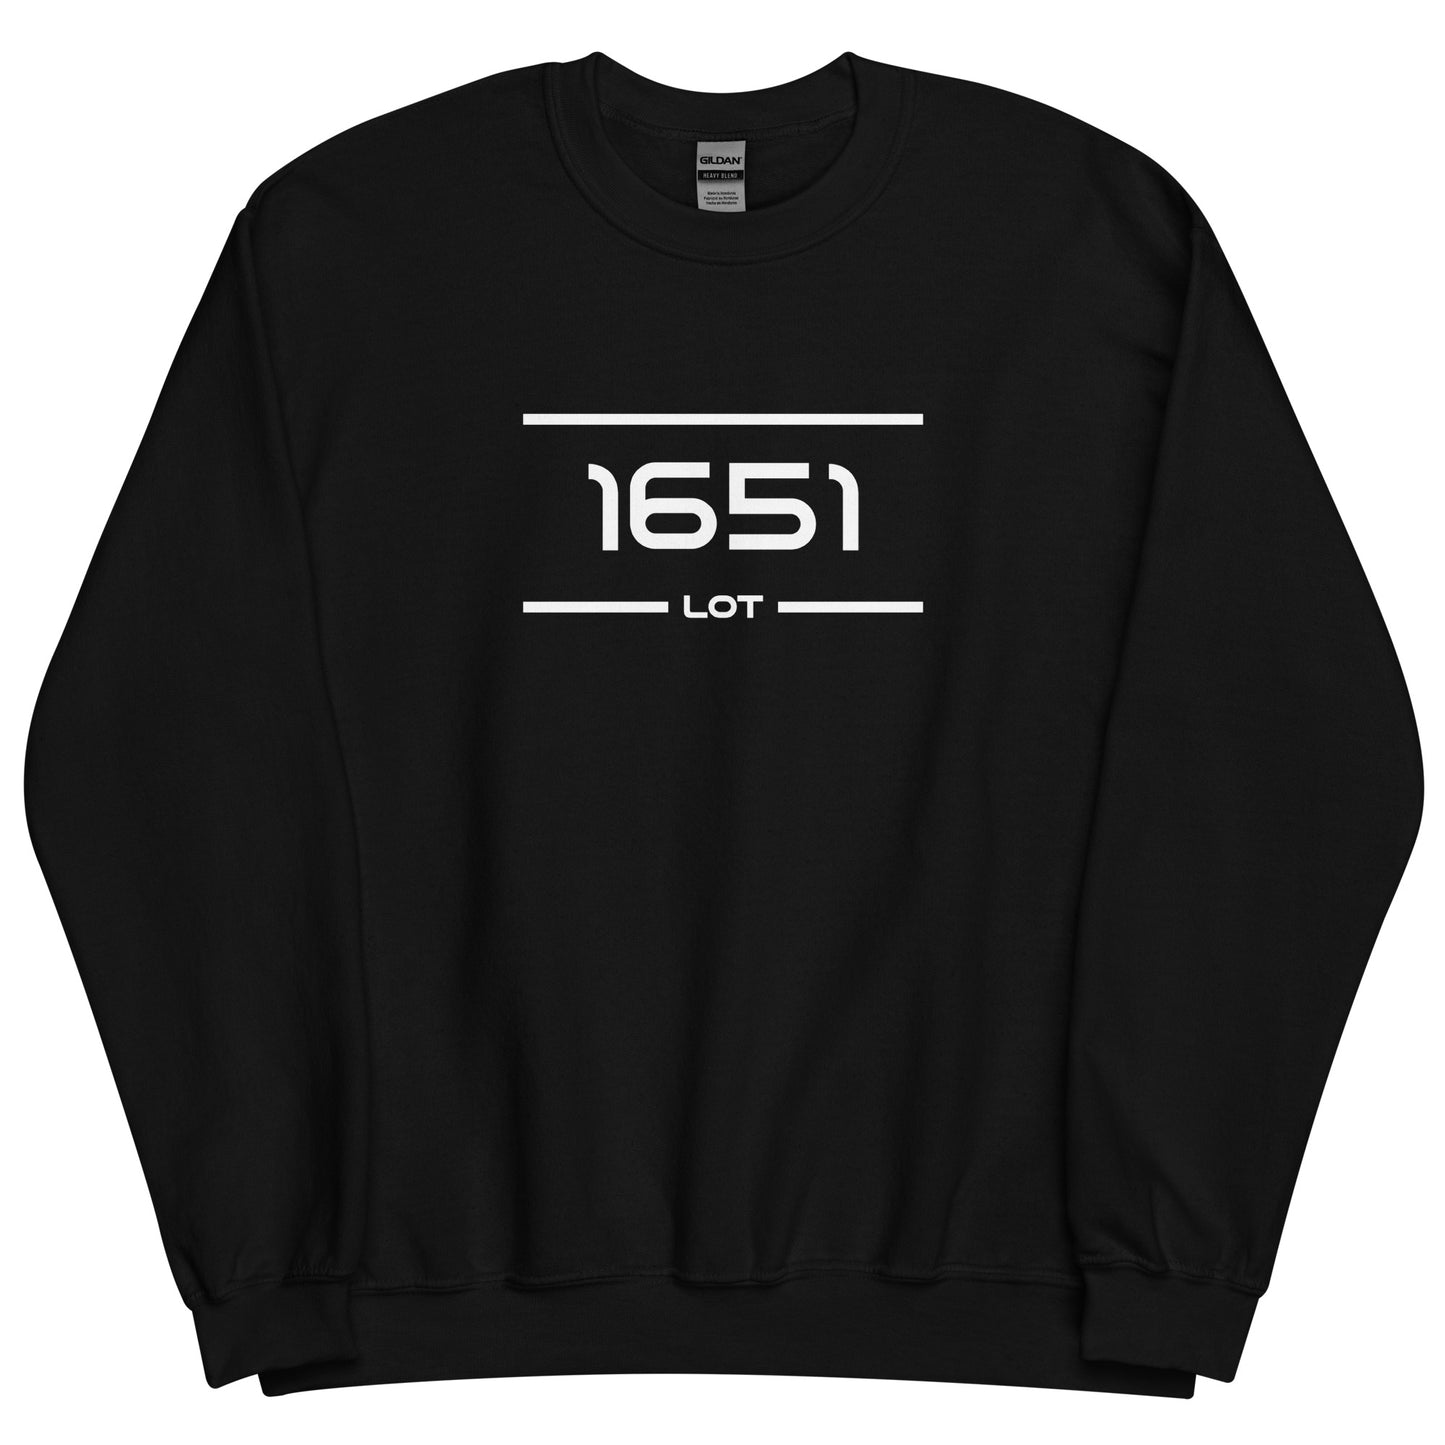 Sweater - 1651 - Lot (M/V)